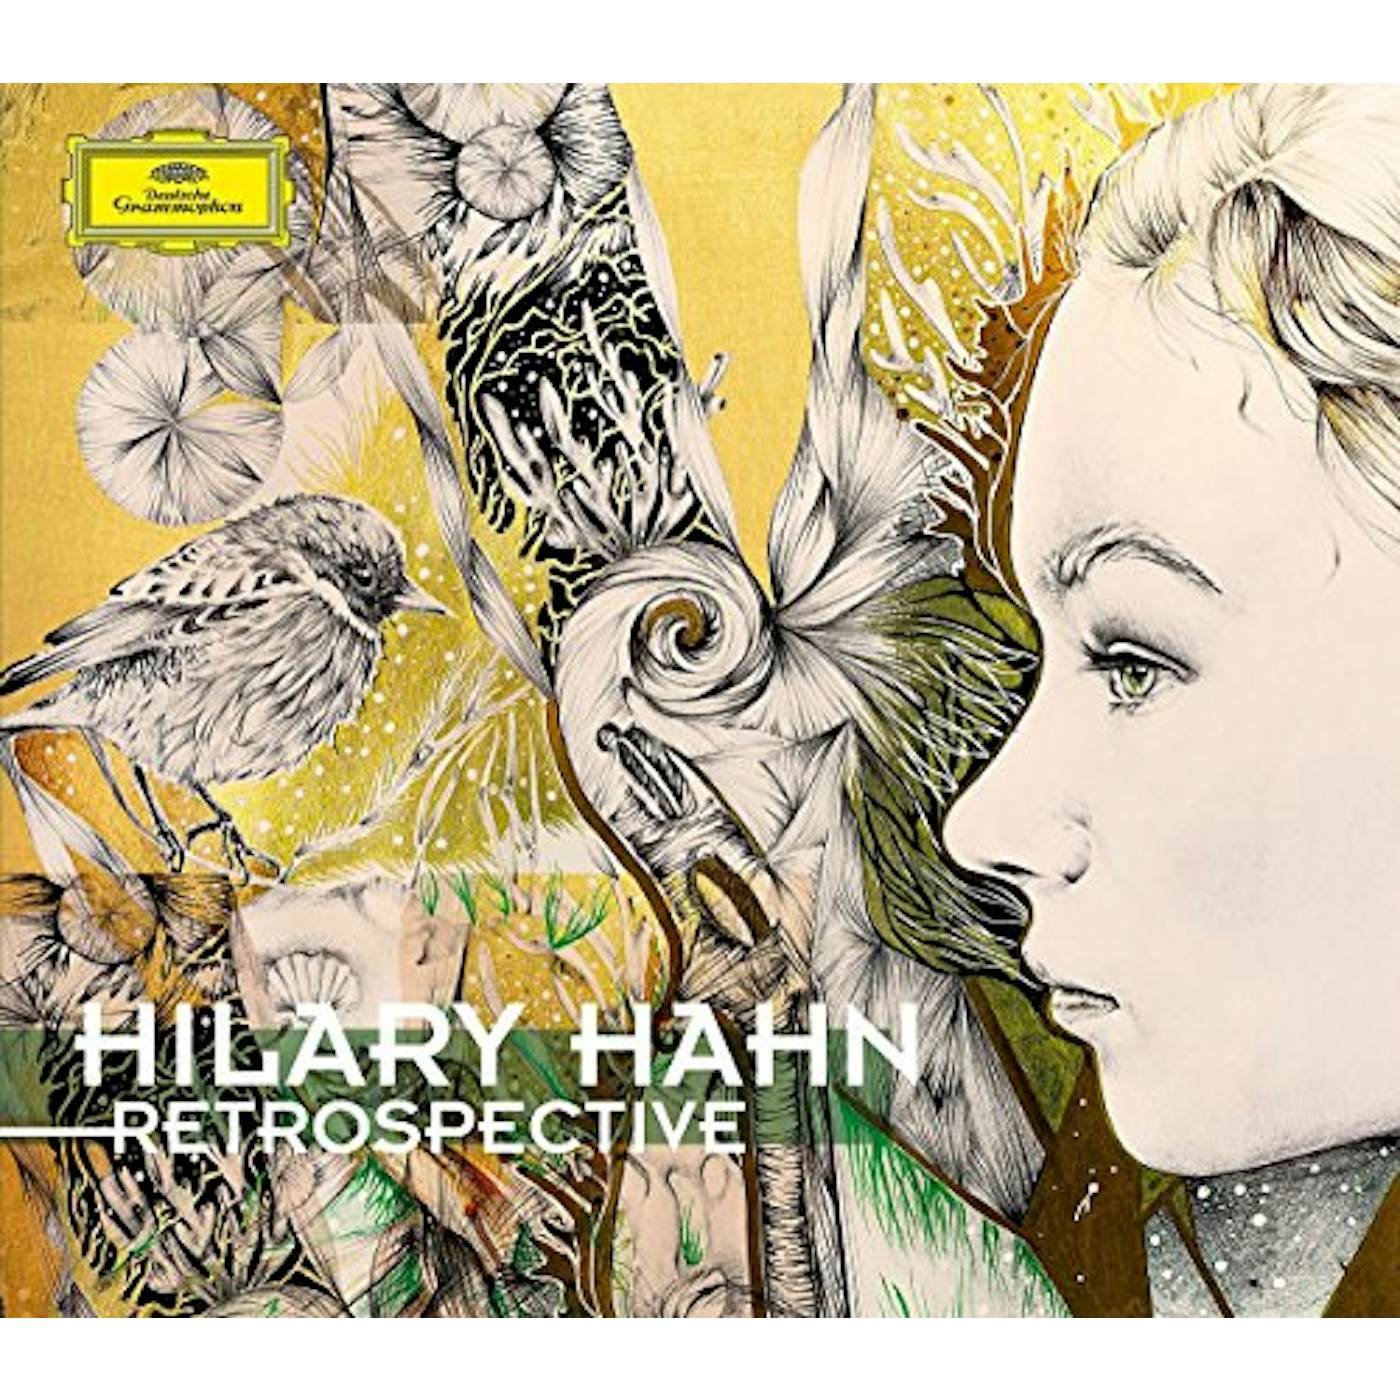 Hilary Hahn Retrospective Vinyl Record